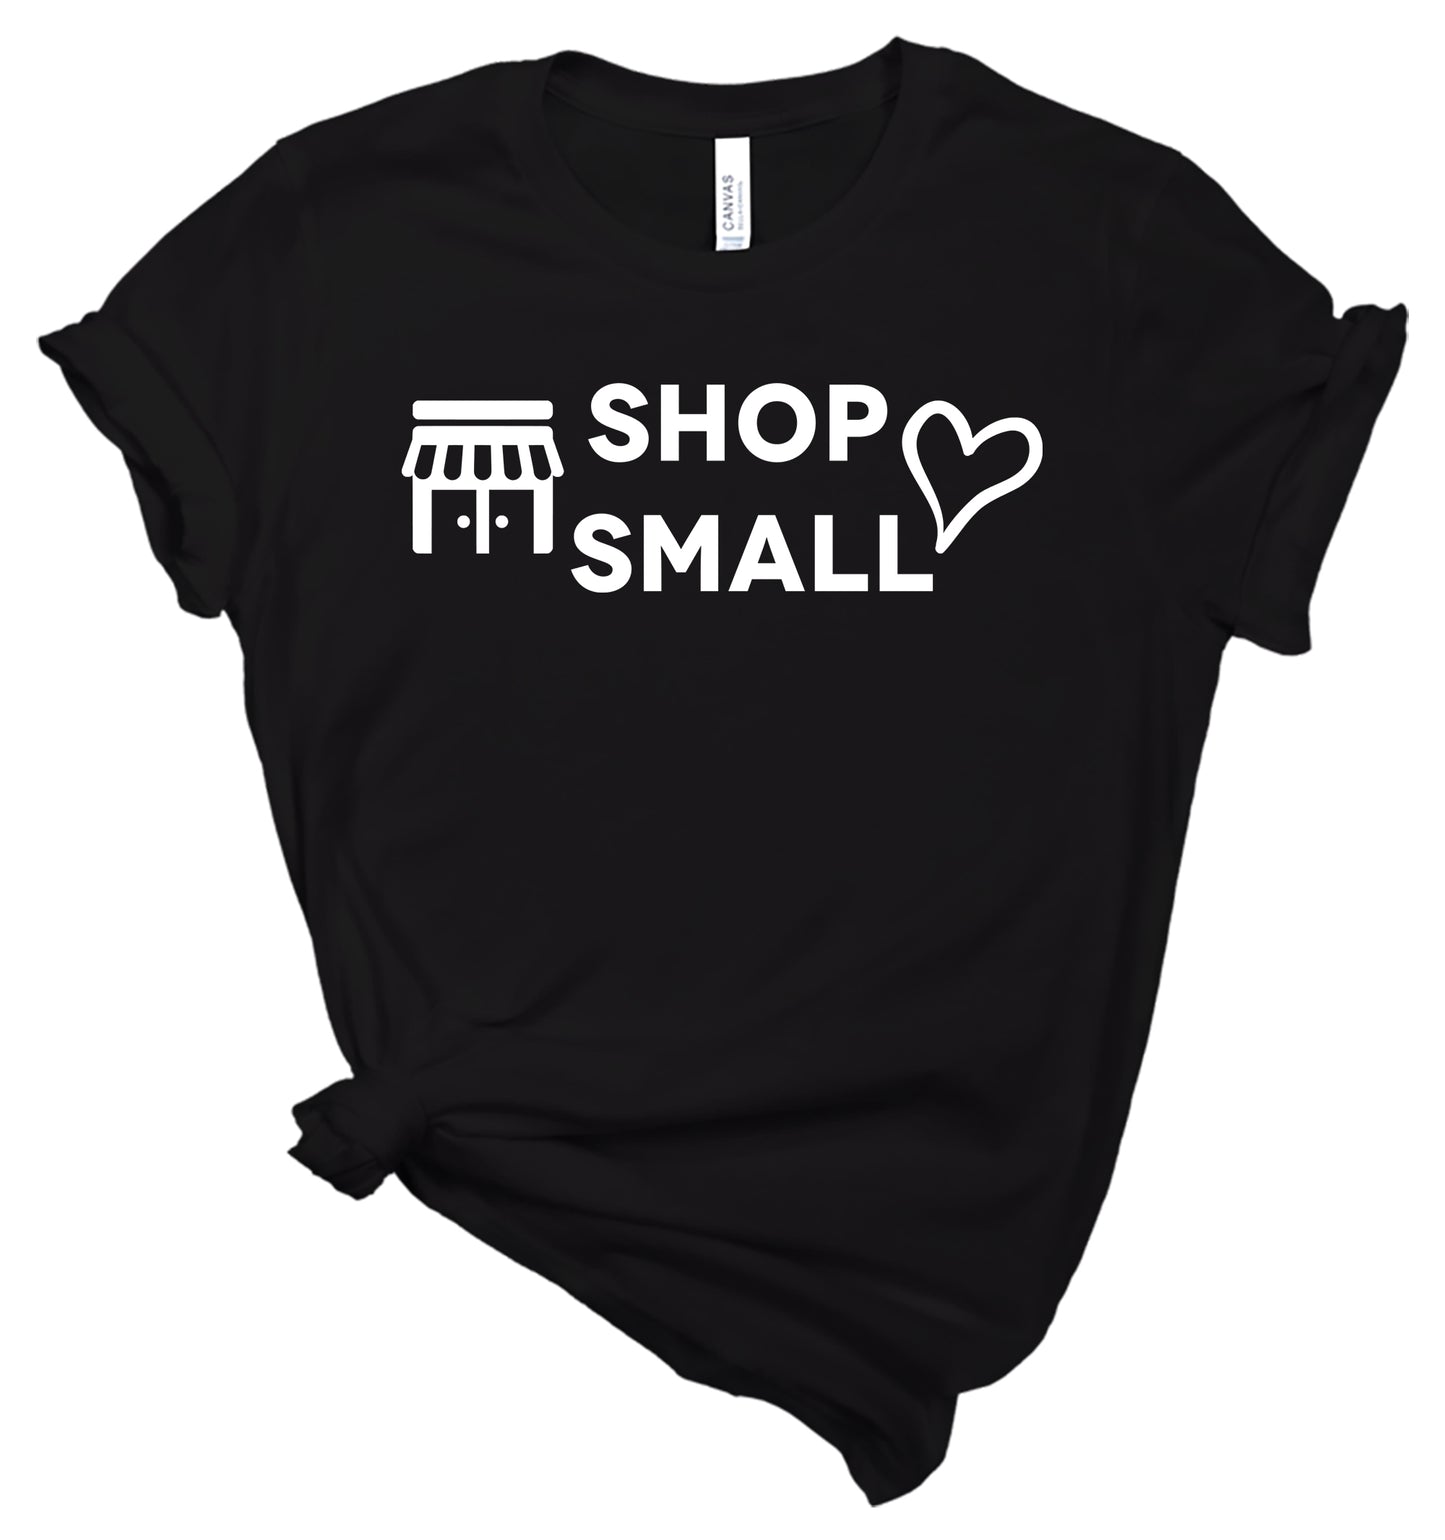 Shop Small T-Shirt - Support Small Business Shirt